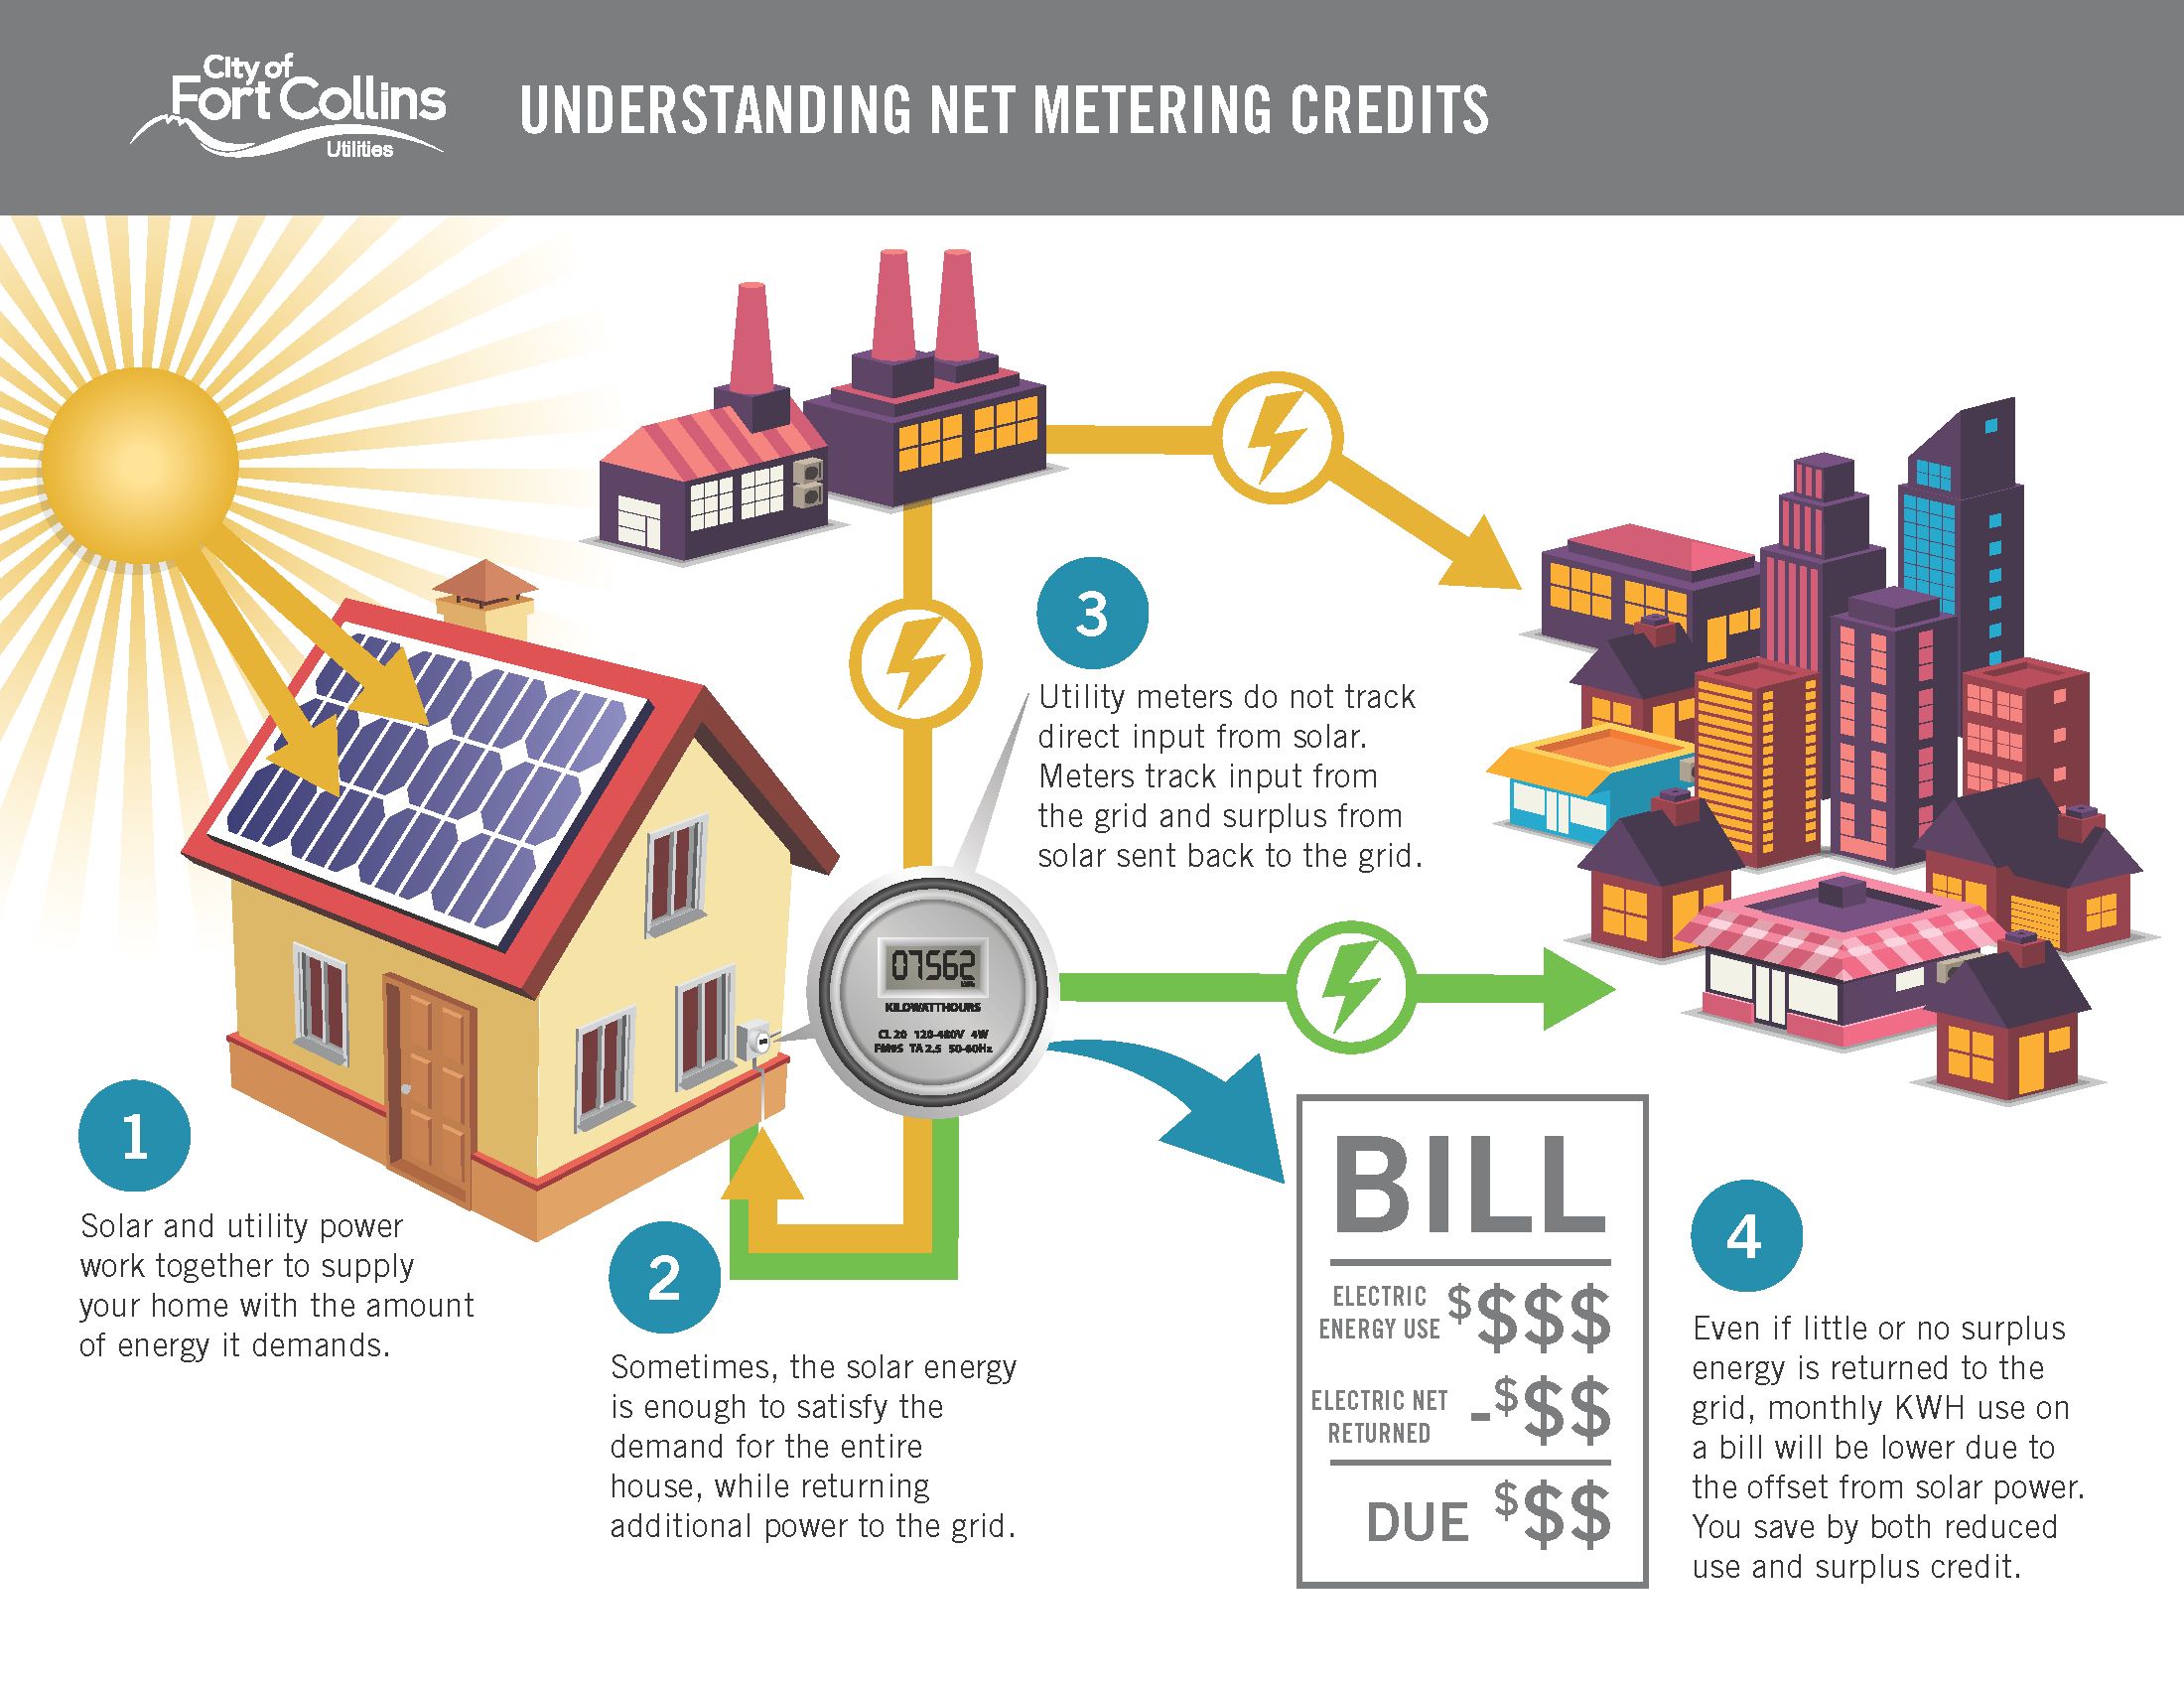 Fort Collins Utility Solar Rebate